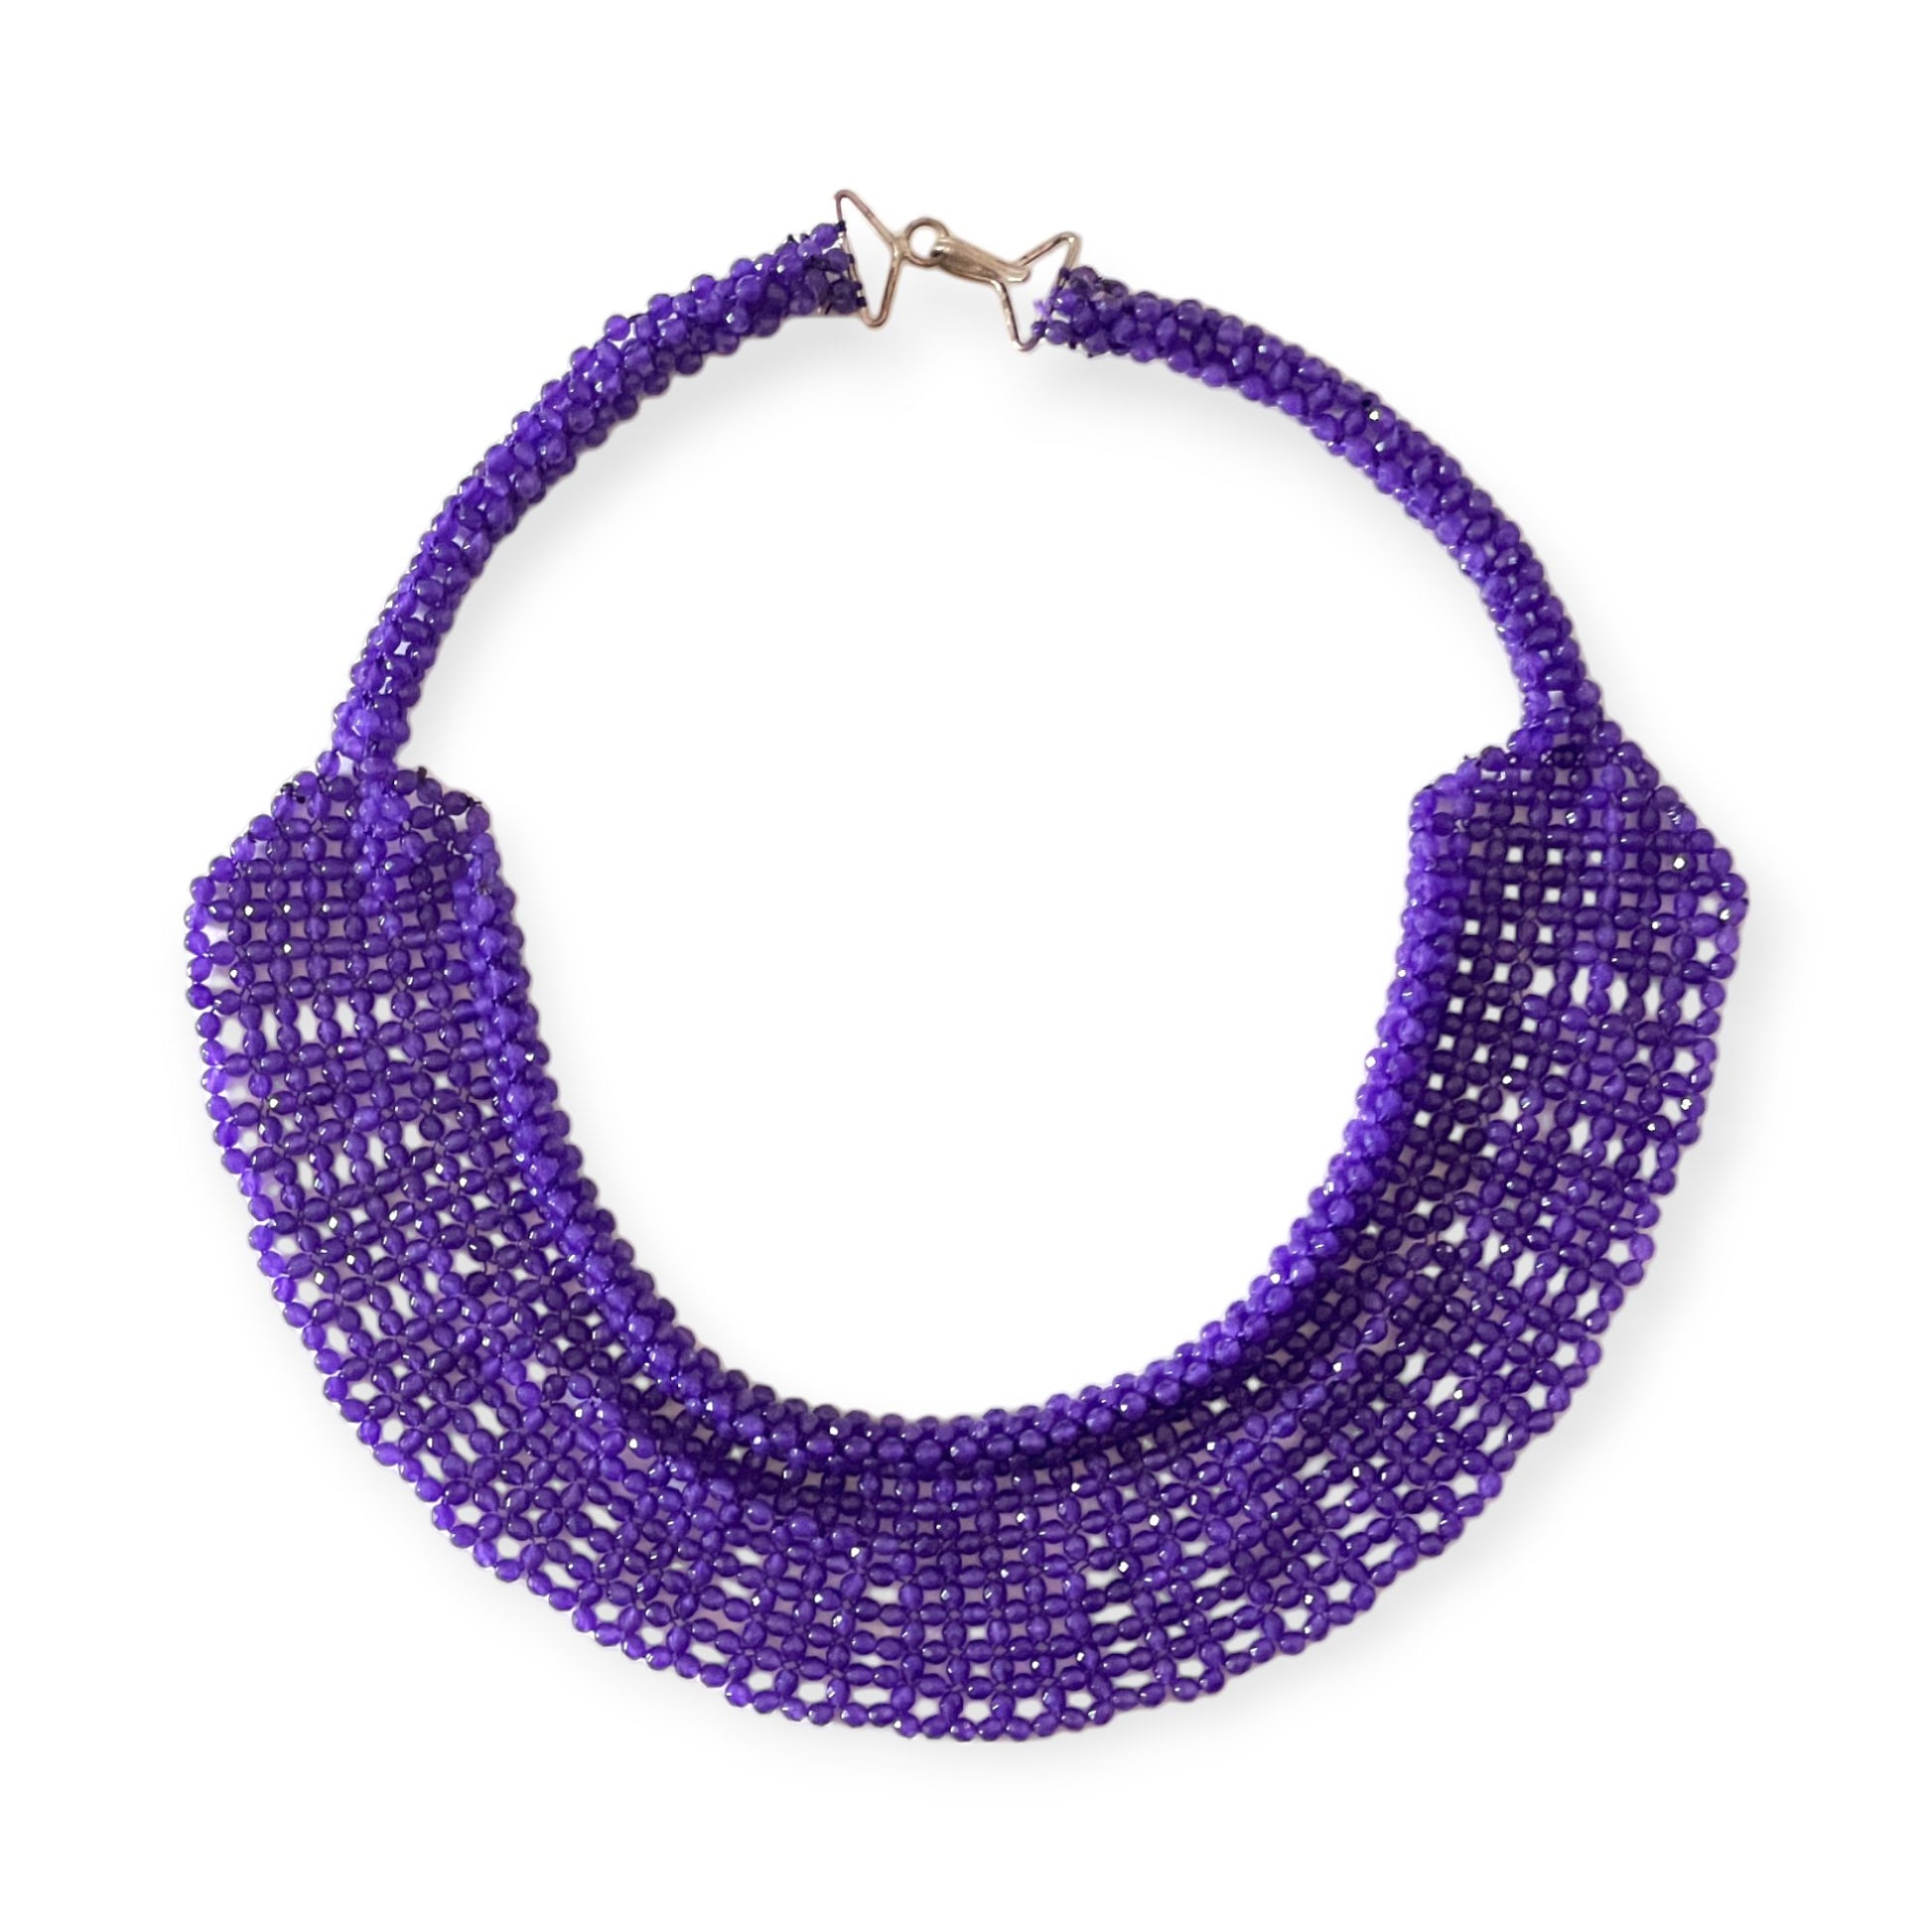 Amethyst beaded collar statement necklace - Sundara Joon